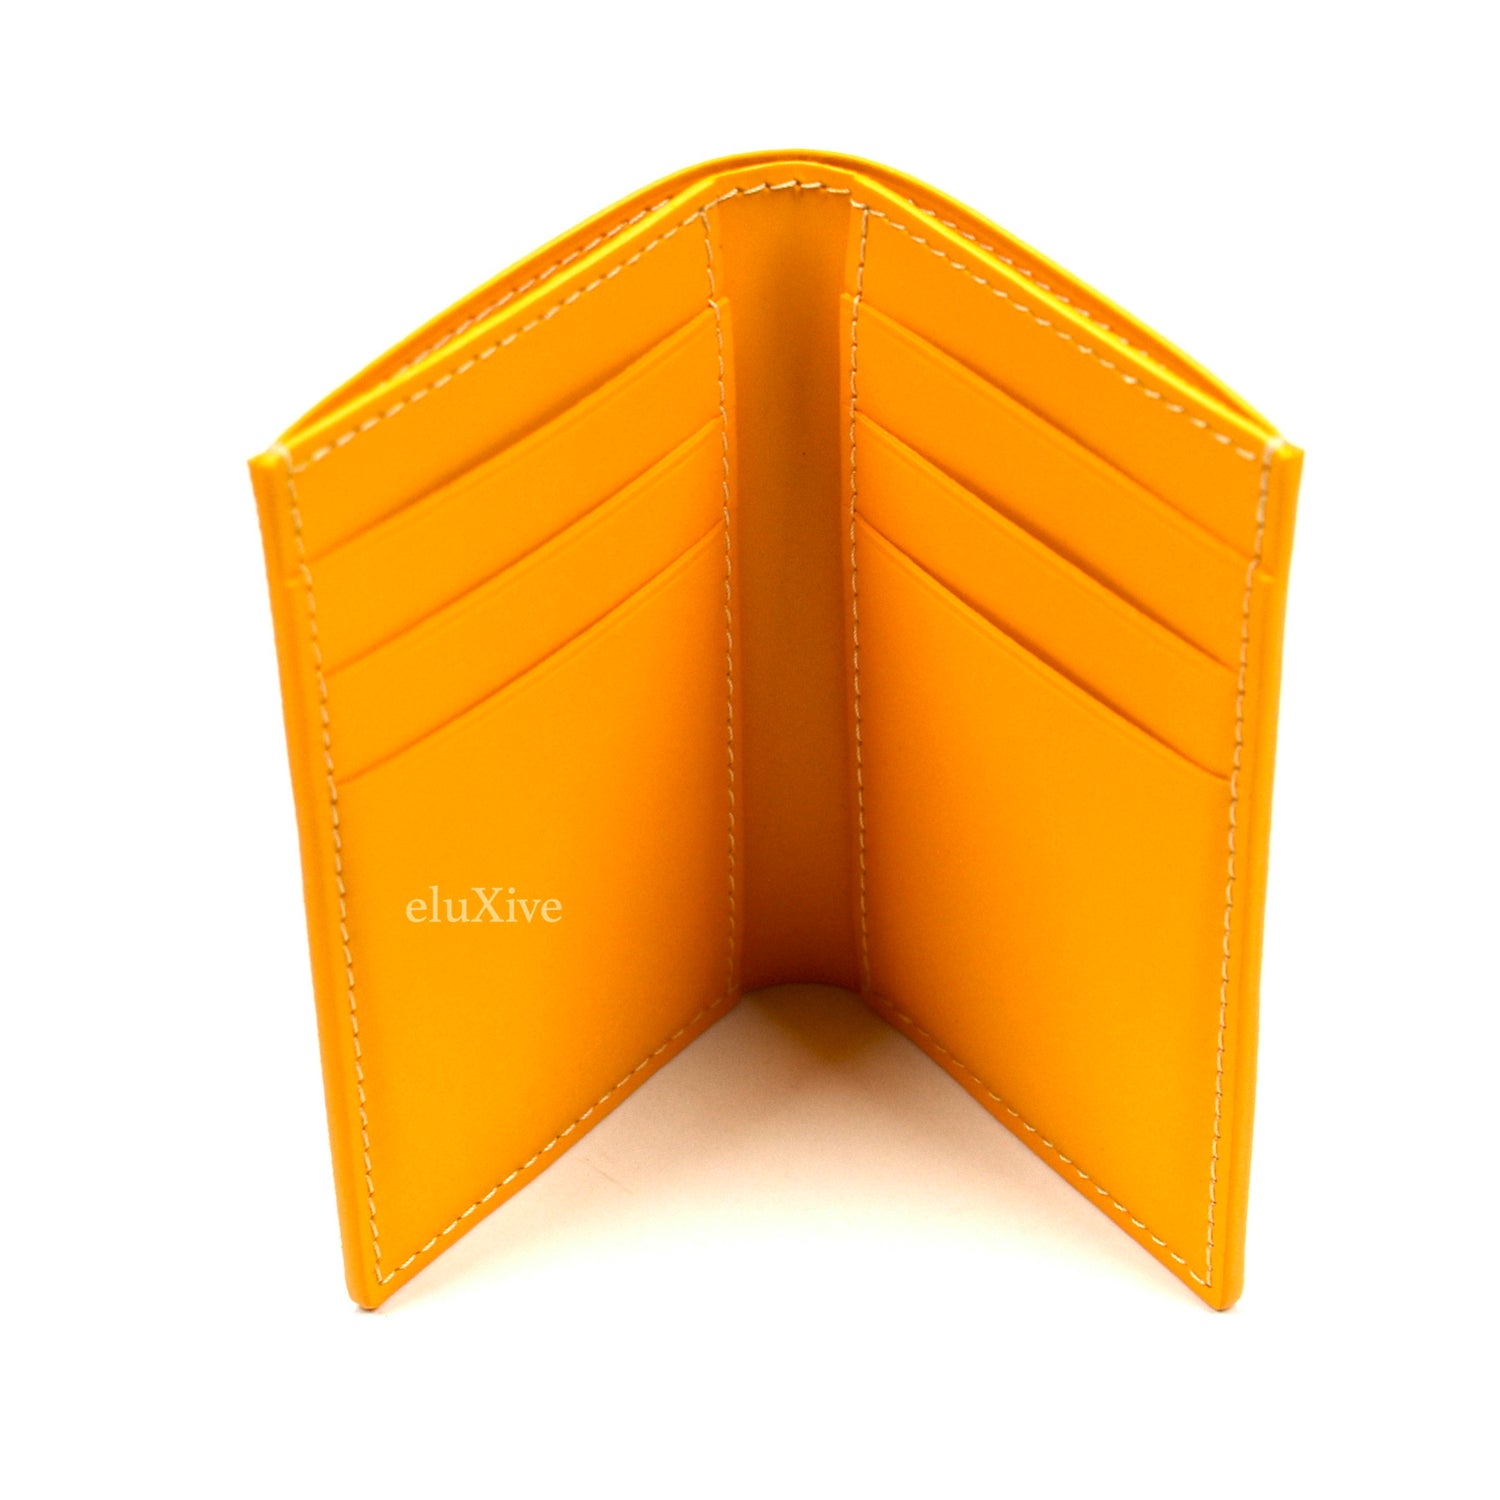 Goyard Yellow Victoire Bifold Wallet